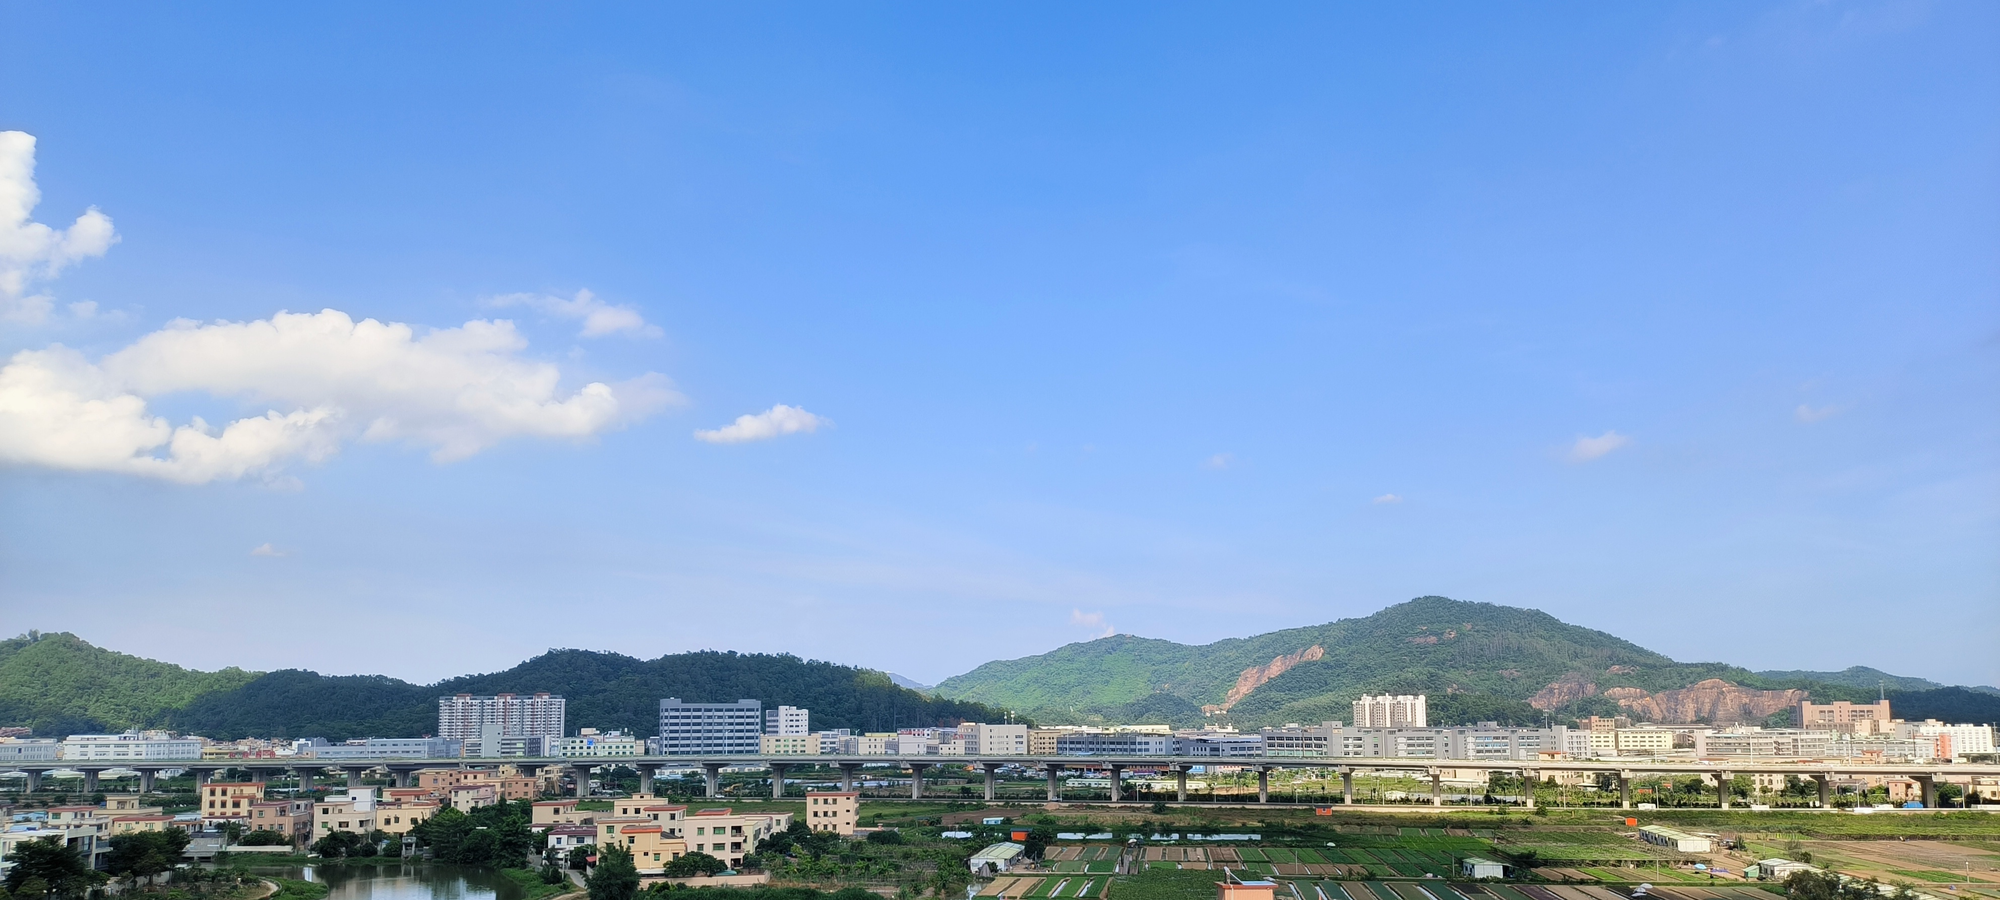 2022年8月1日 流羽 投稿 拍摄于广东中山